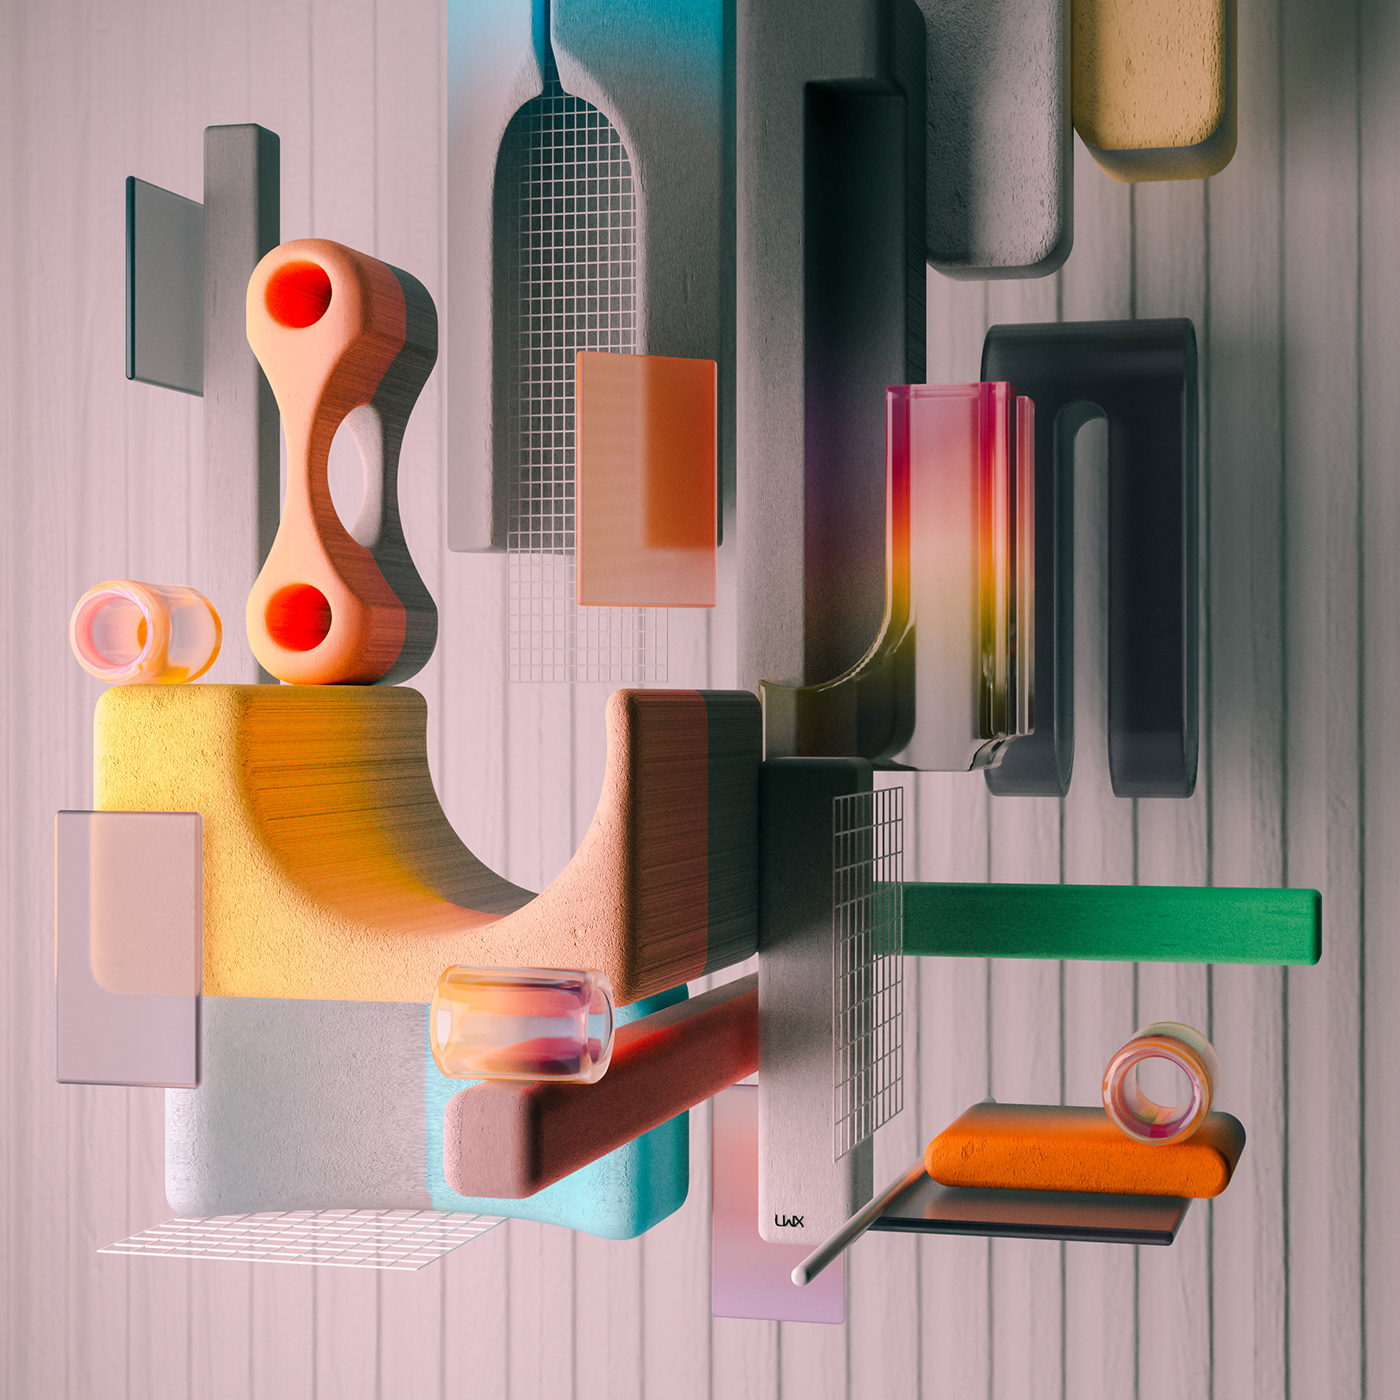 3D surreal colorful plexiglass concrete Abstract Art Modern Design floating fantasy digital illustration